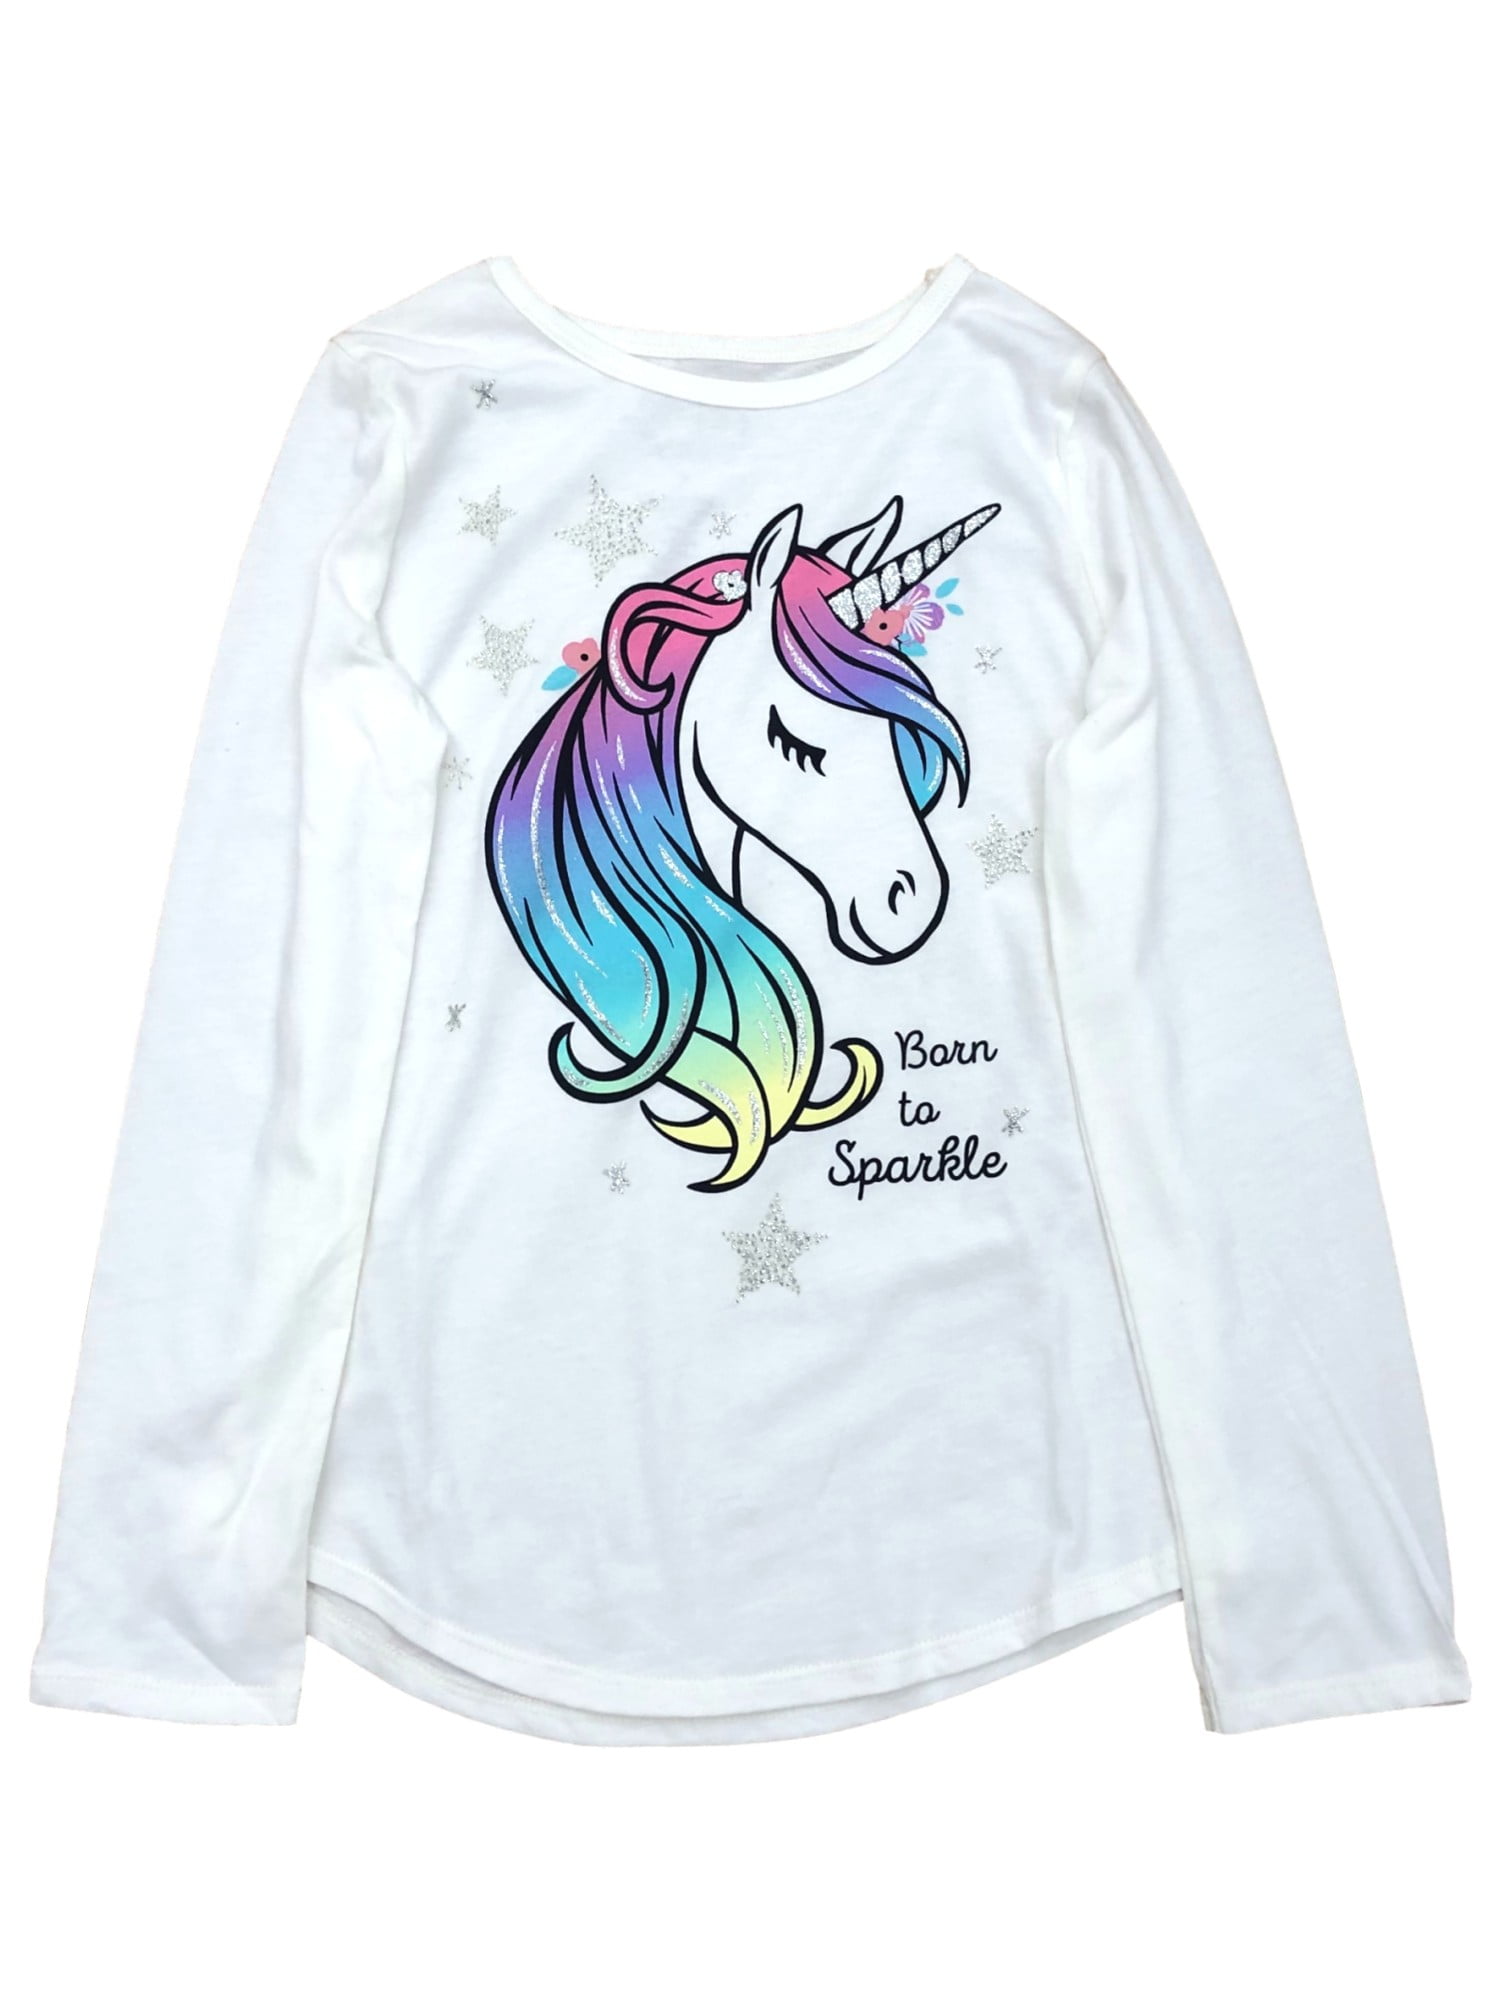 Unicorn Riding A Shark Casual T-Shirt Short Sleeve for Kids